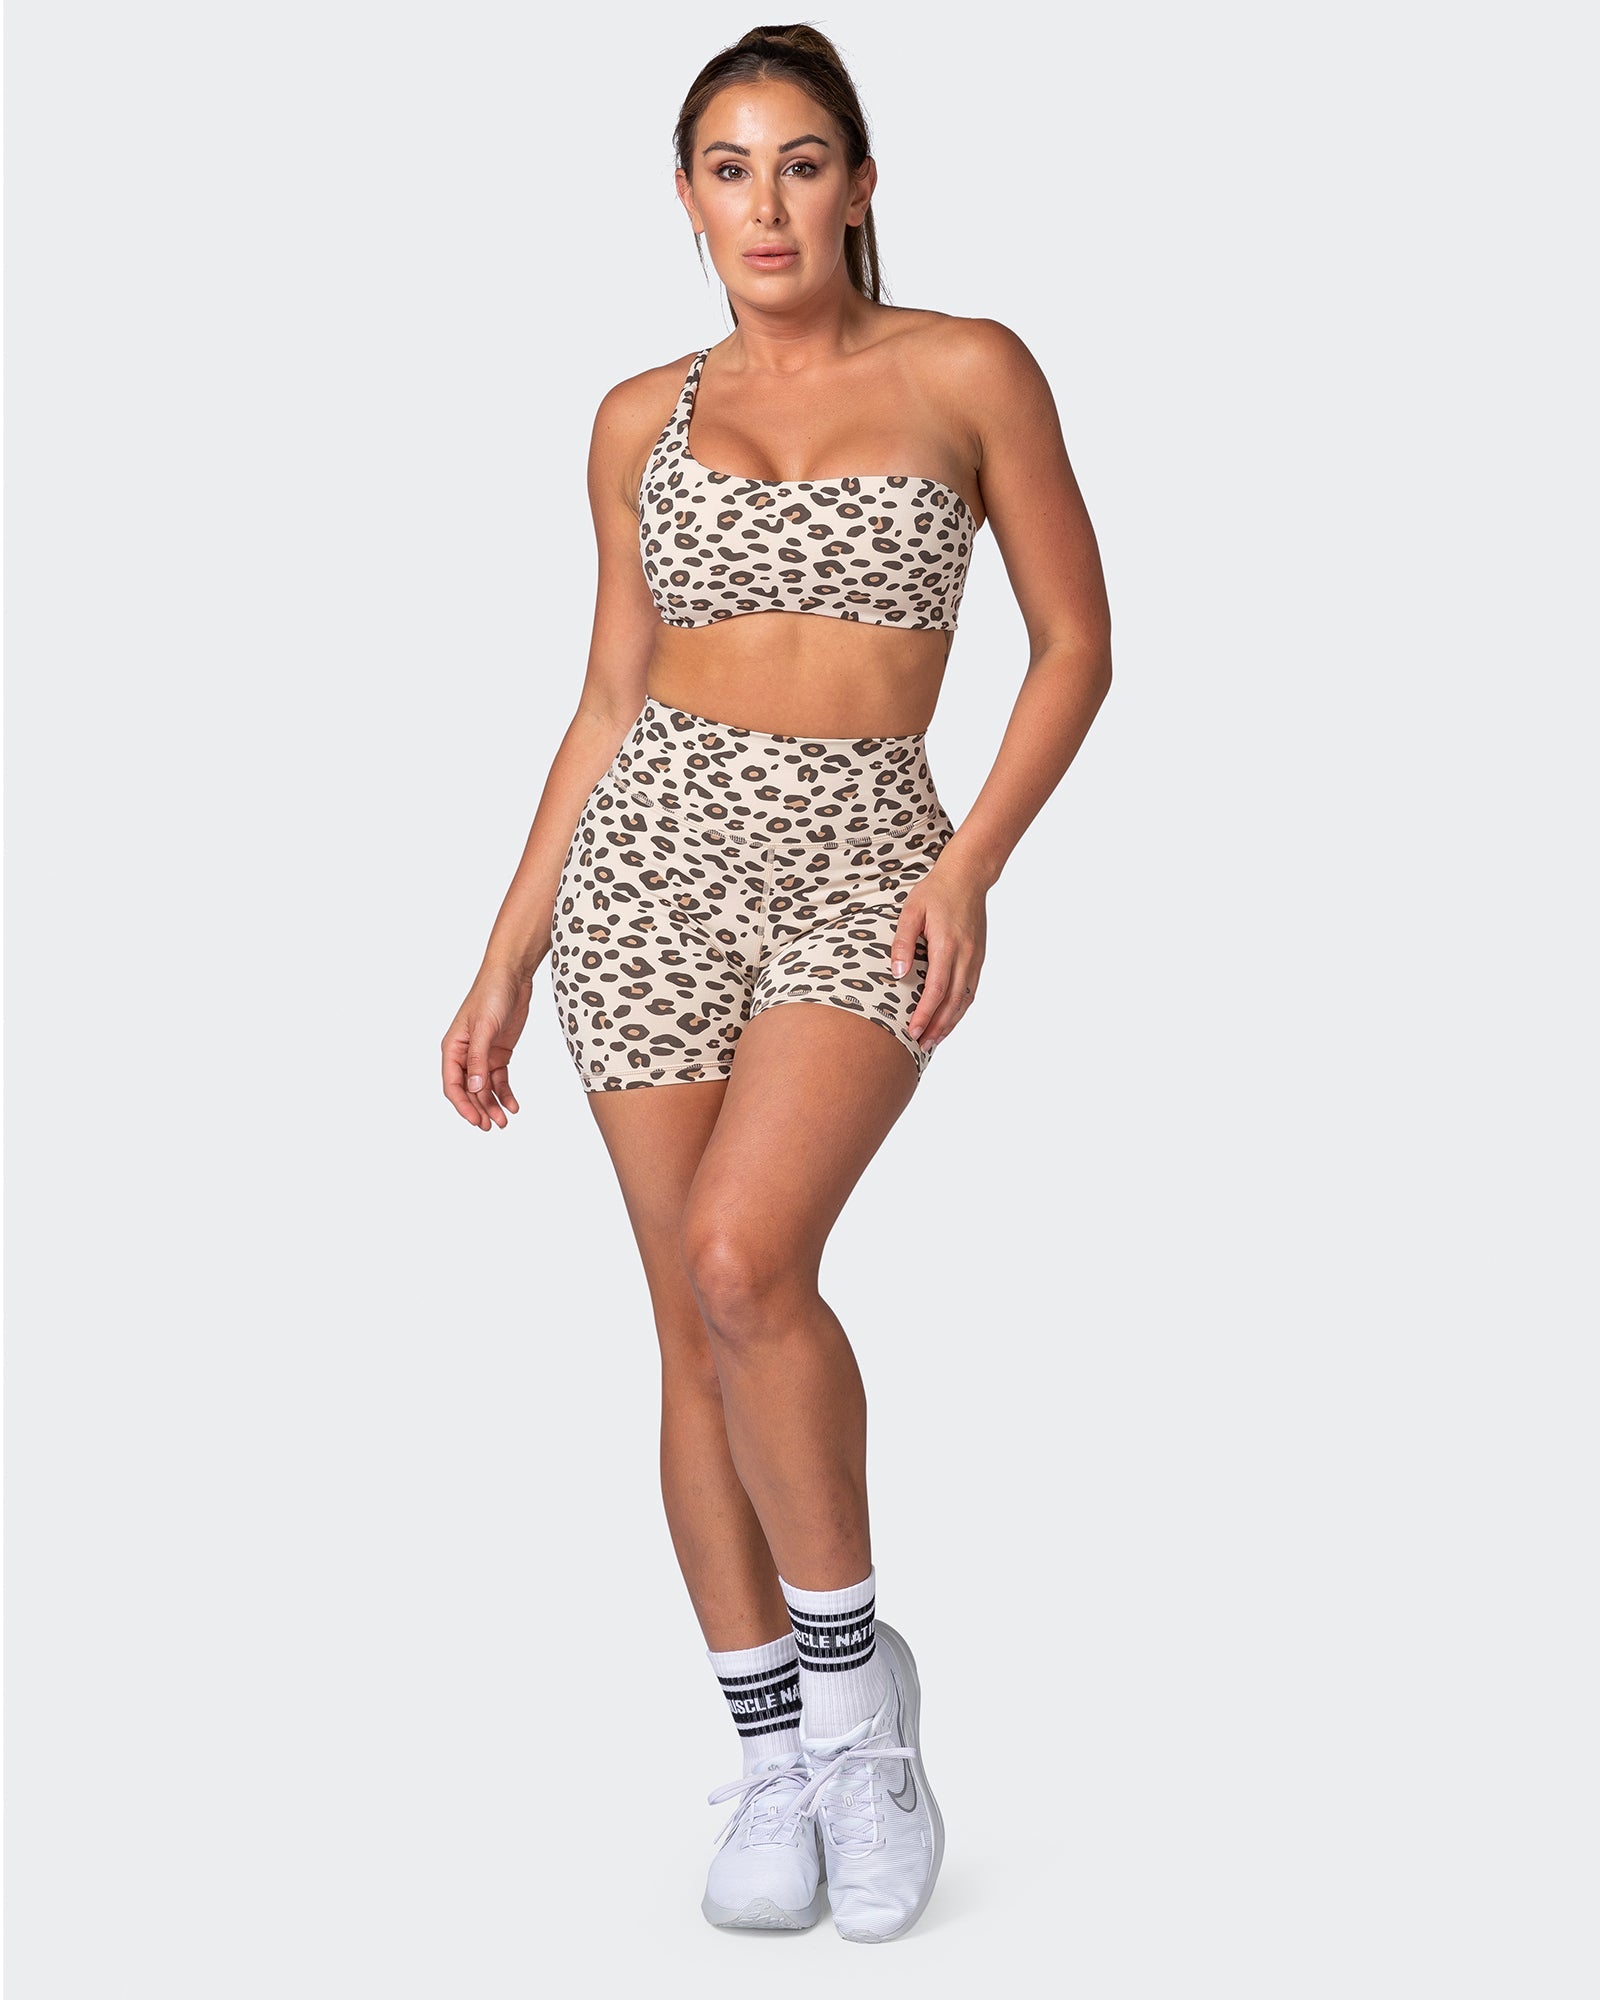 musclenation Shorts Signature Scrunch Midway Shorts - Cheetah Print